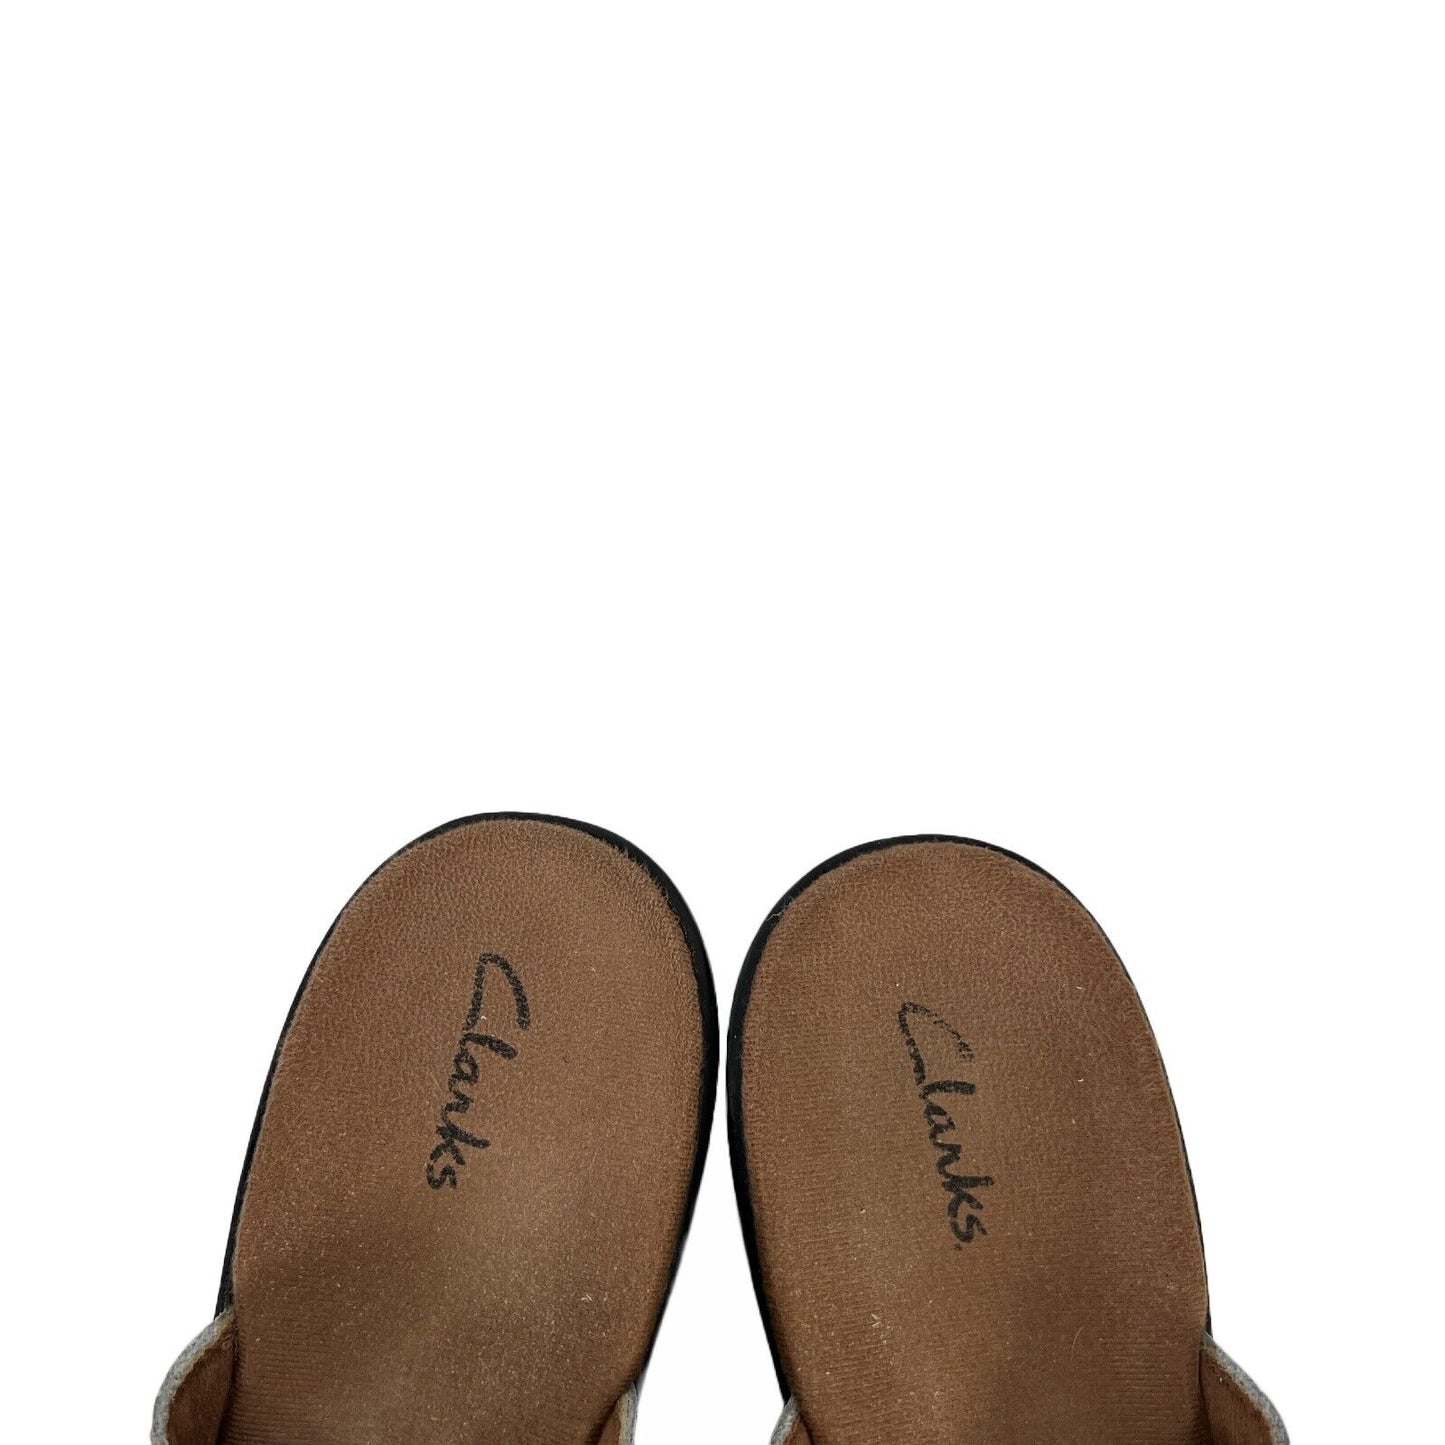 Clarks Women's White Leather Open Toe Sandals - 9